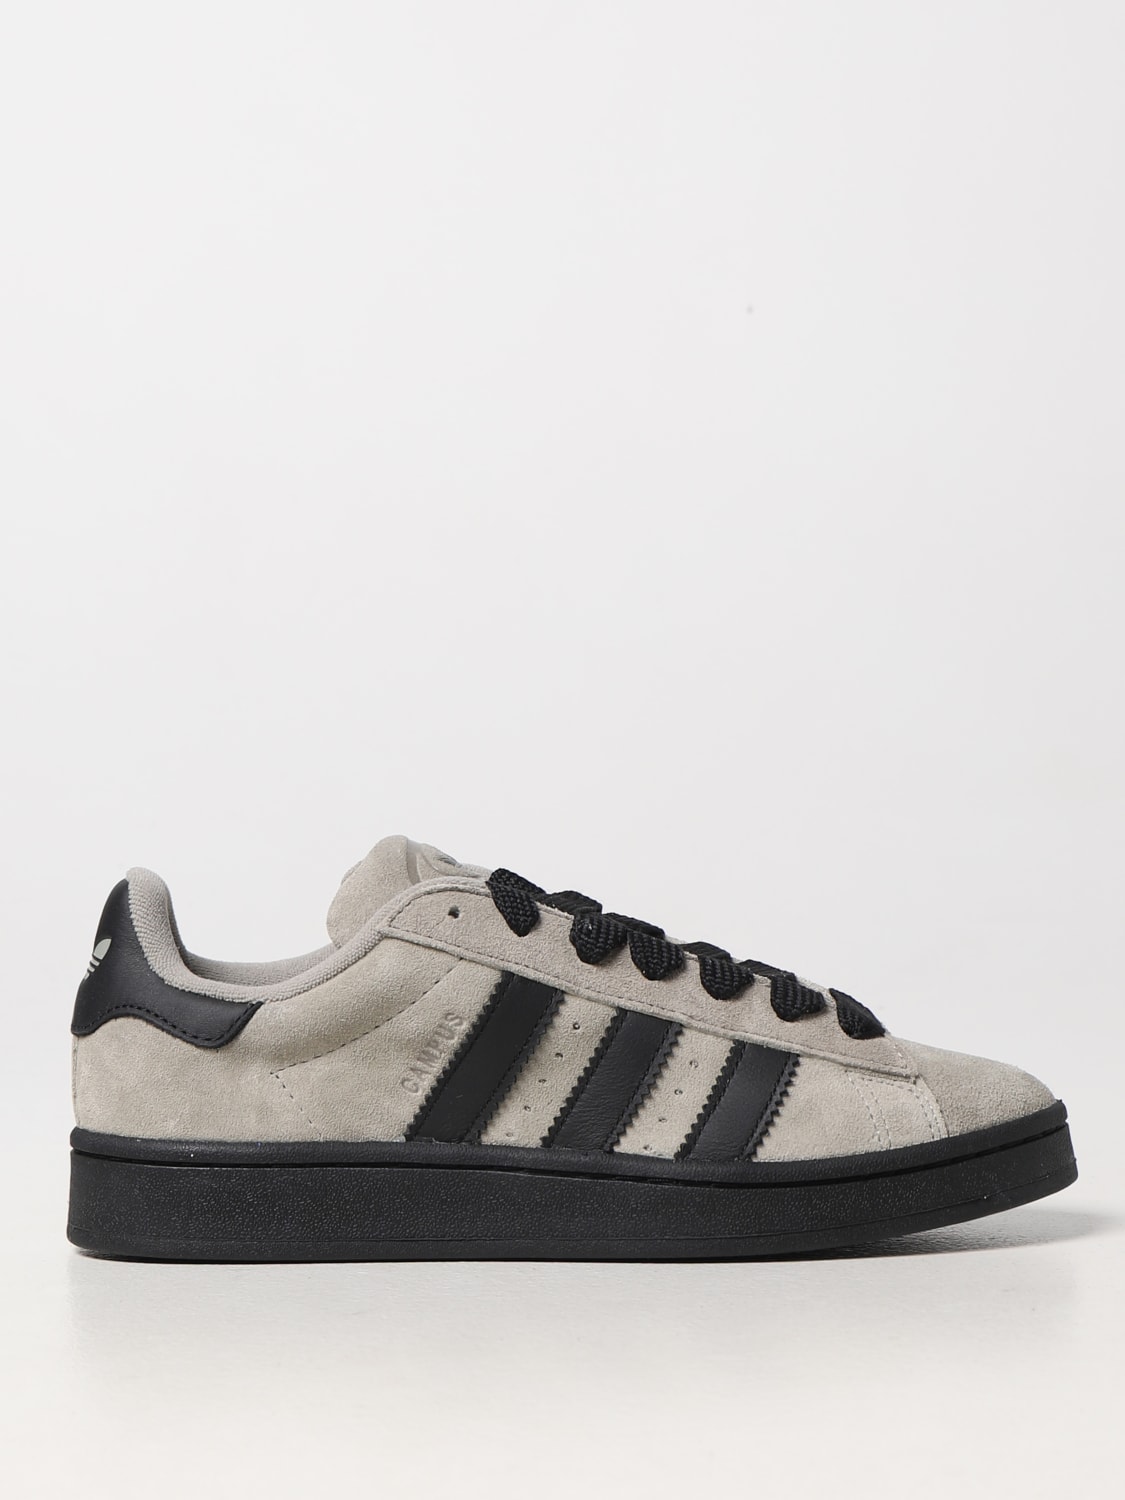 ORIGINALS: for man - Grey | Adidas Originals sneakers H03469 online on GIGLIO.COM